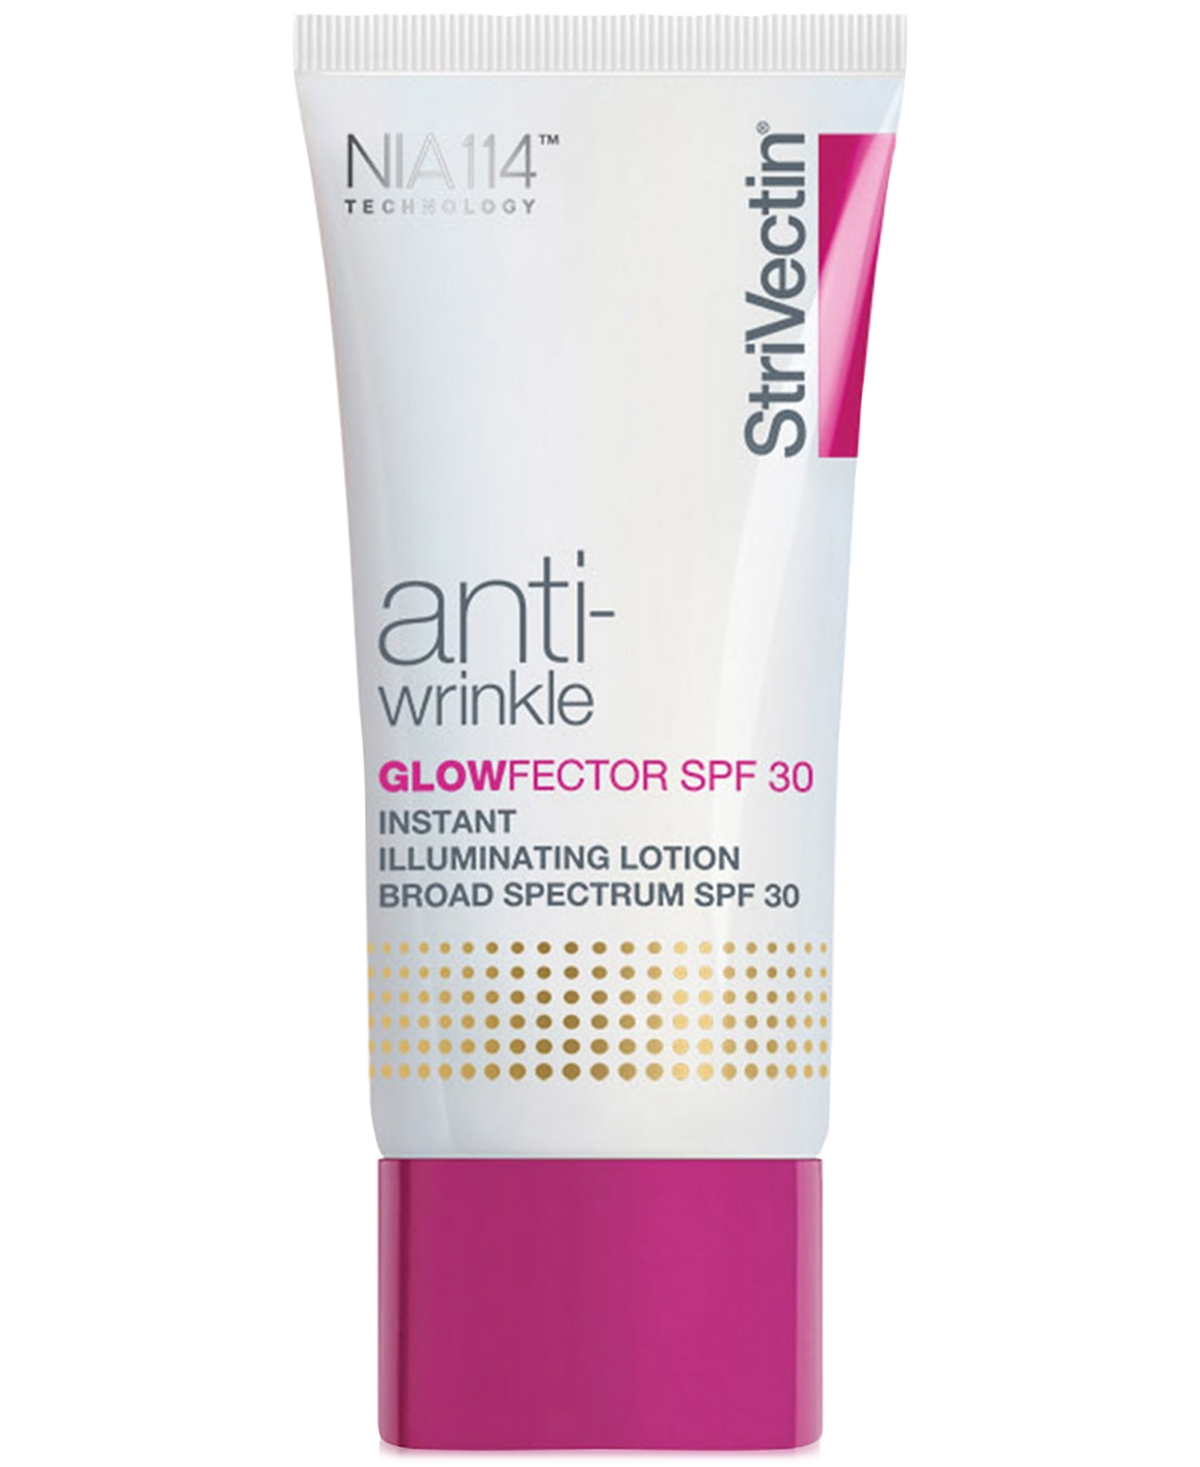 Anti-Wrinkle GlowFector Spf 30, 1 oz